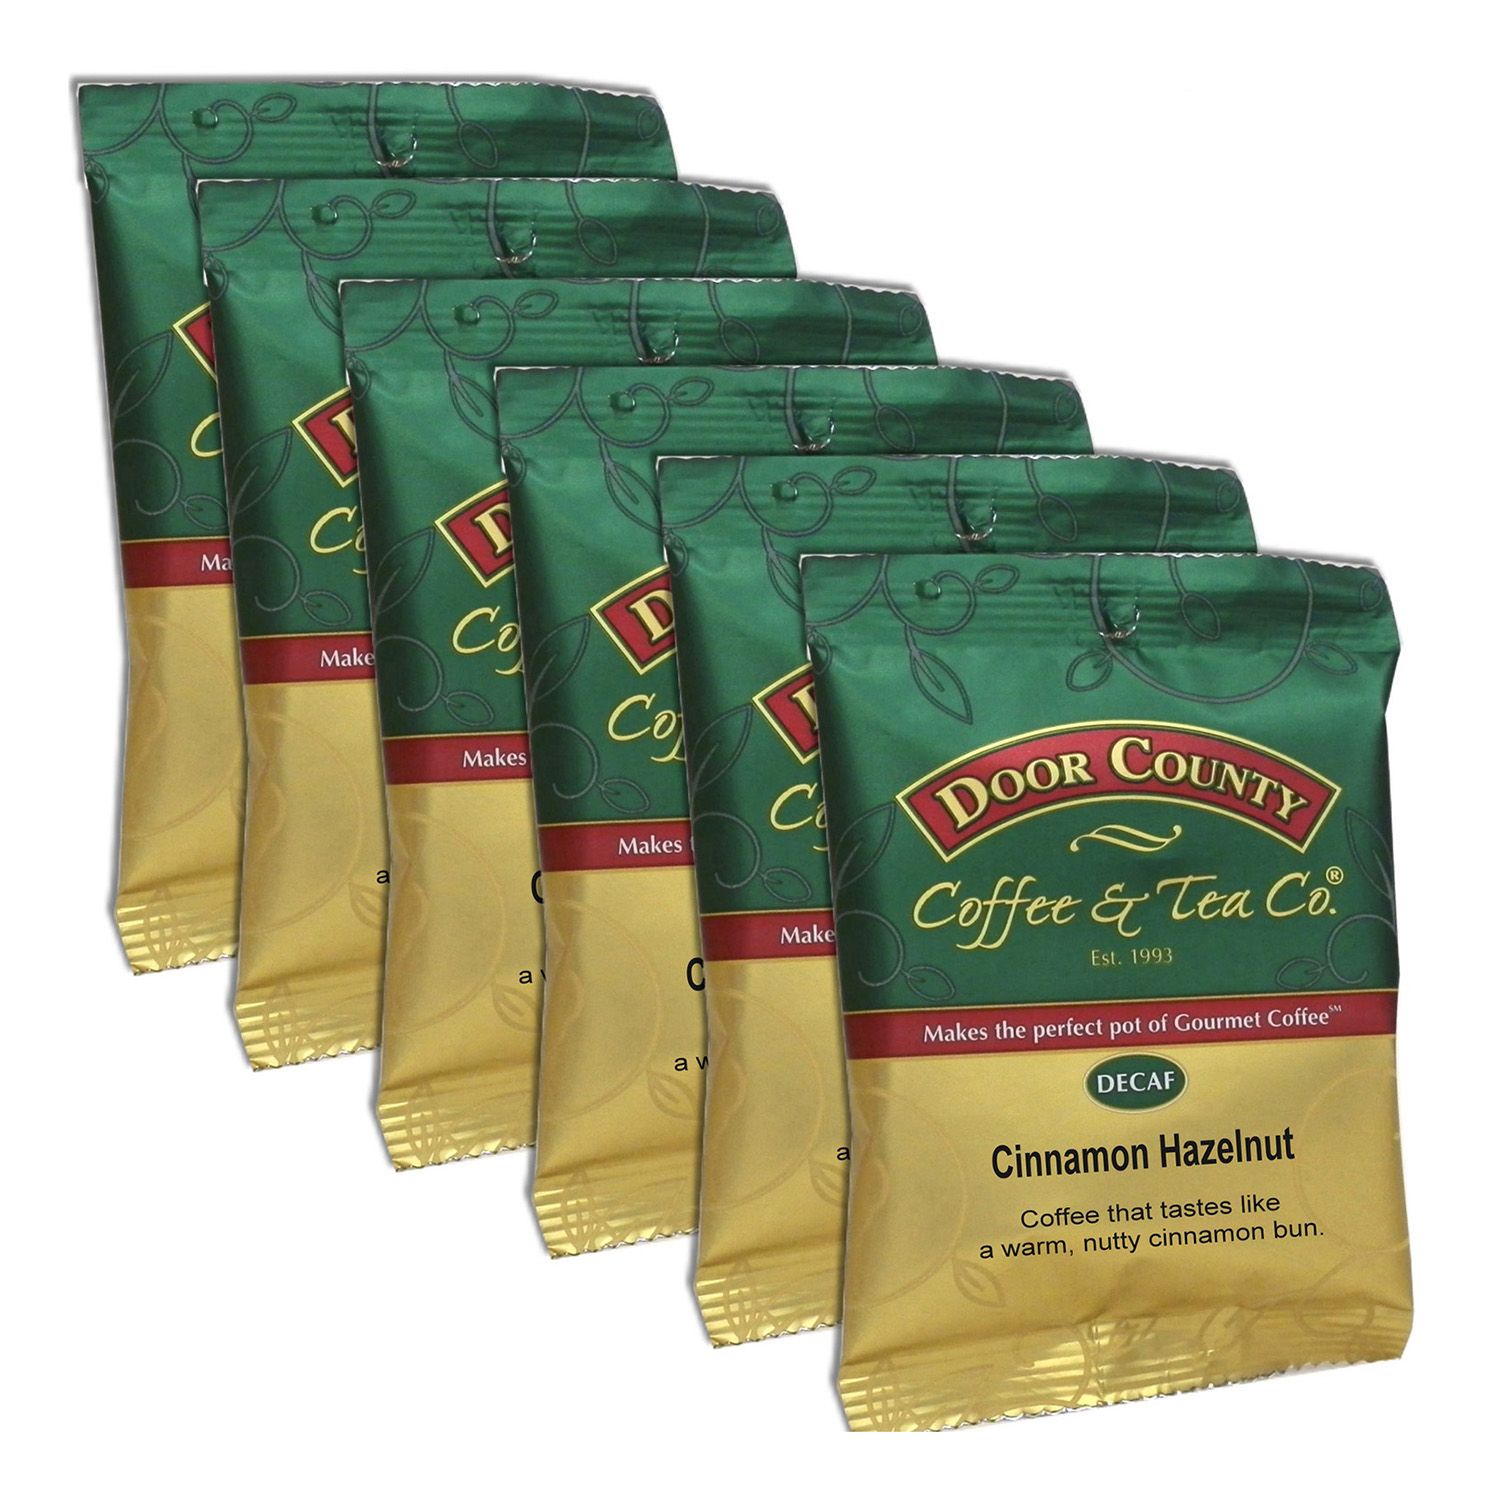 Image for Door County Coffee & Tea Co. Decaf Cinnamon Hazelnut Ground Coffee 6-pk. at Kohl's.